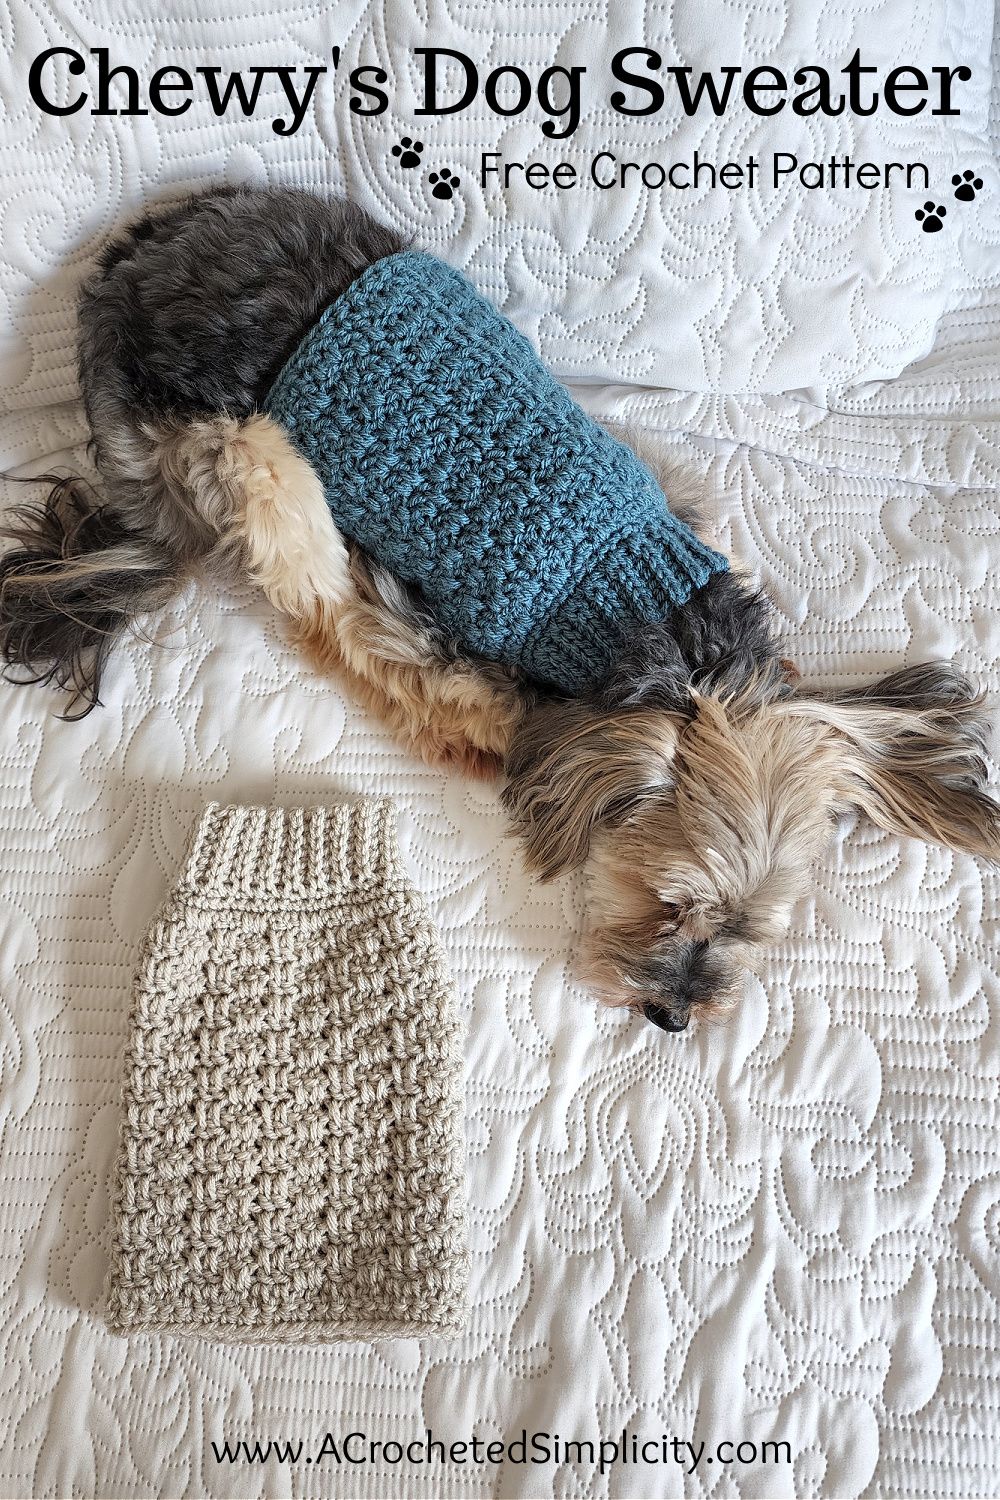 Chewy's Crochet Dog Sweater - Free Crochet Pattern for Pets